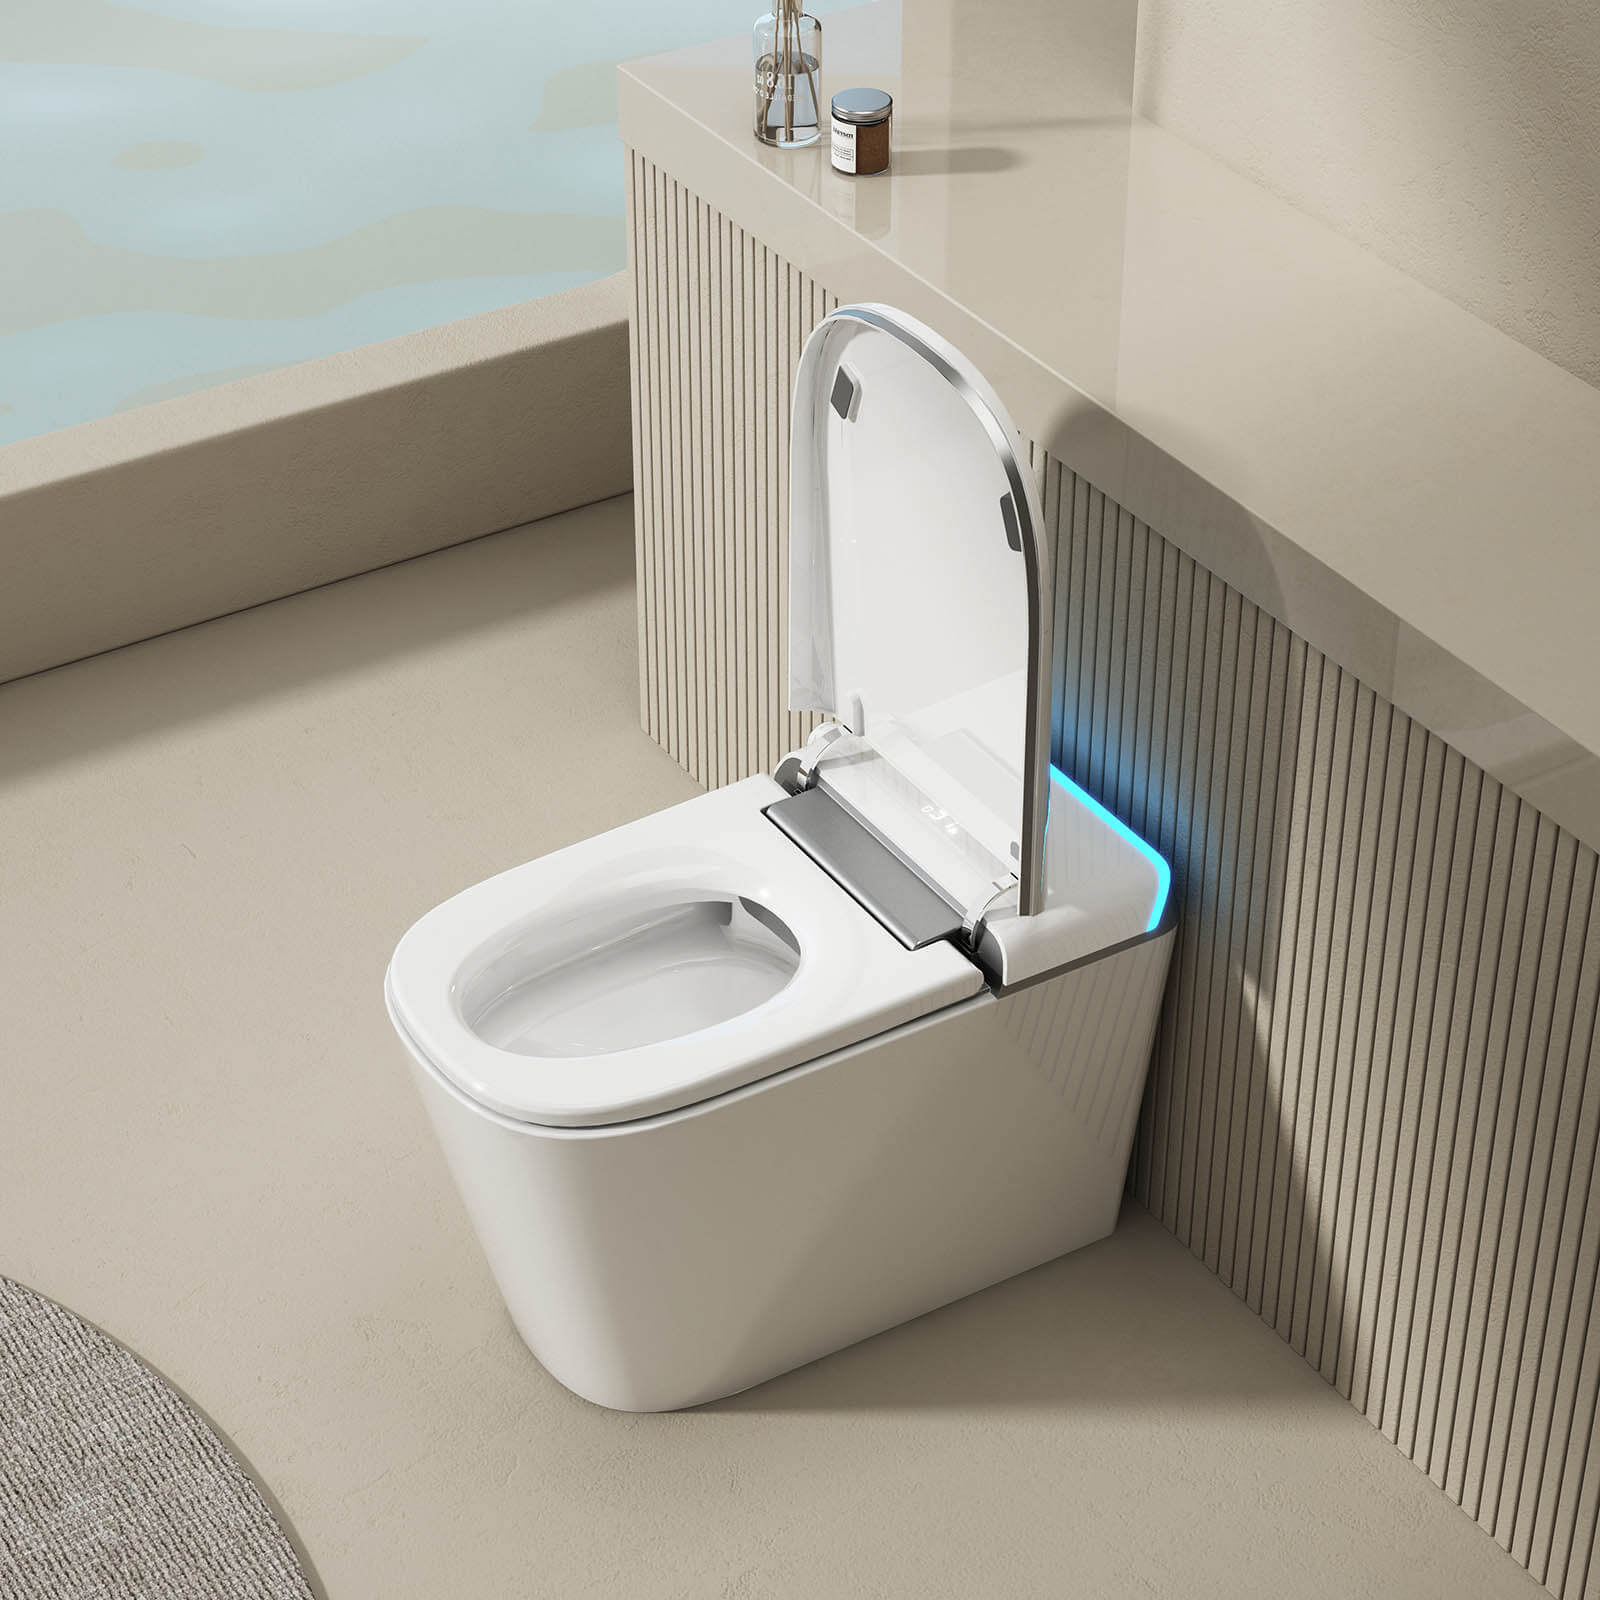 Built-in Water Tank High-Tech Toilet White